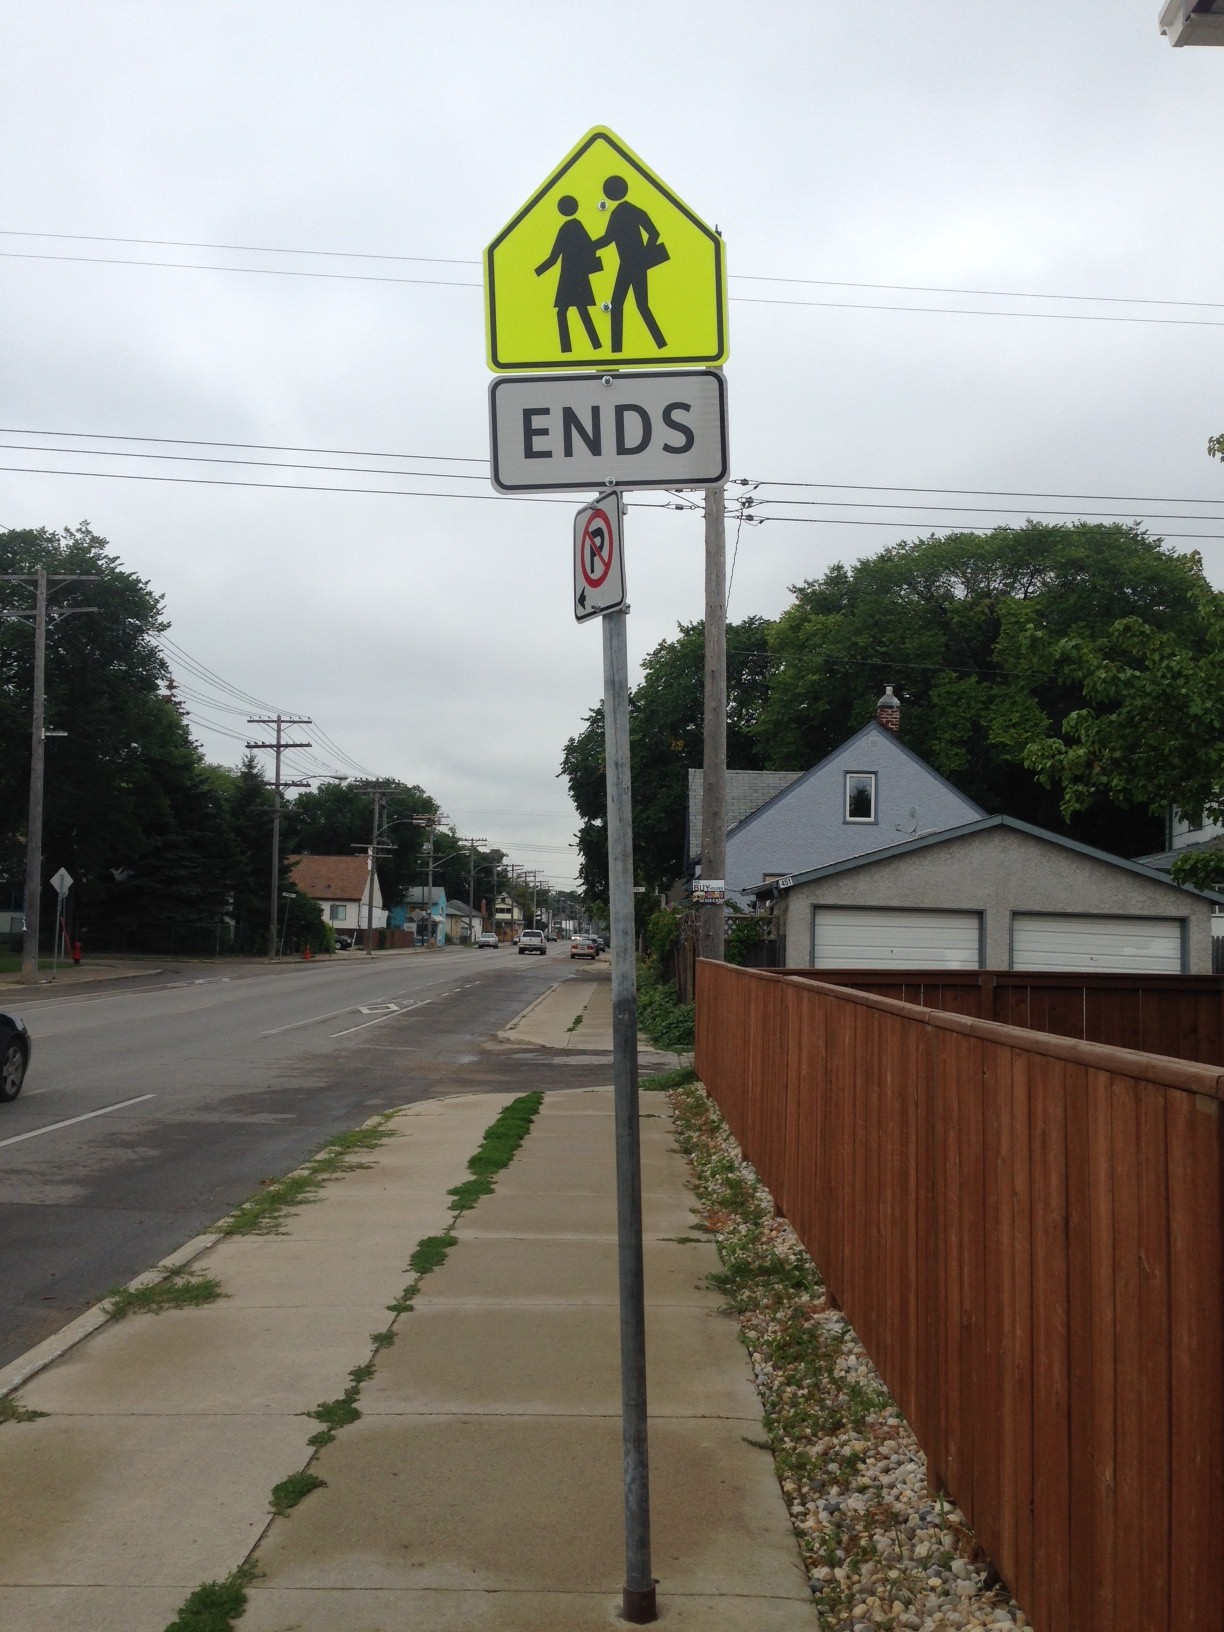 Reduced Speed Limit in School Zones - Public Works - City of Winnipeg